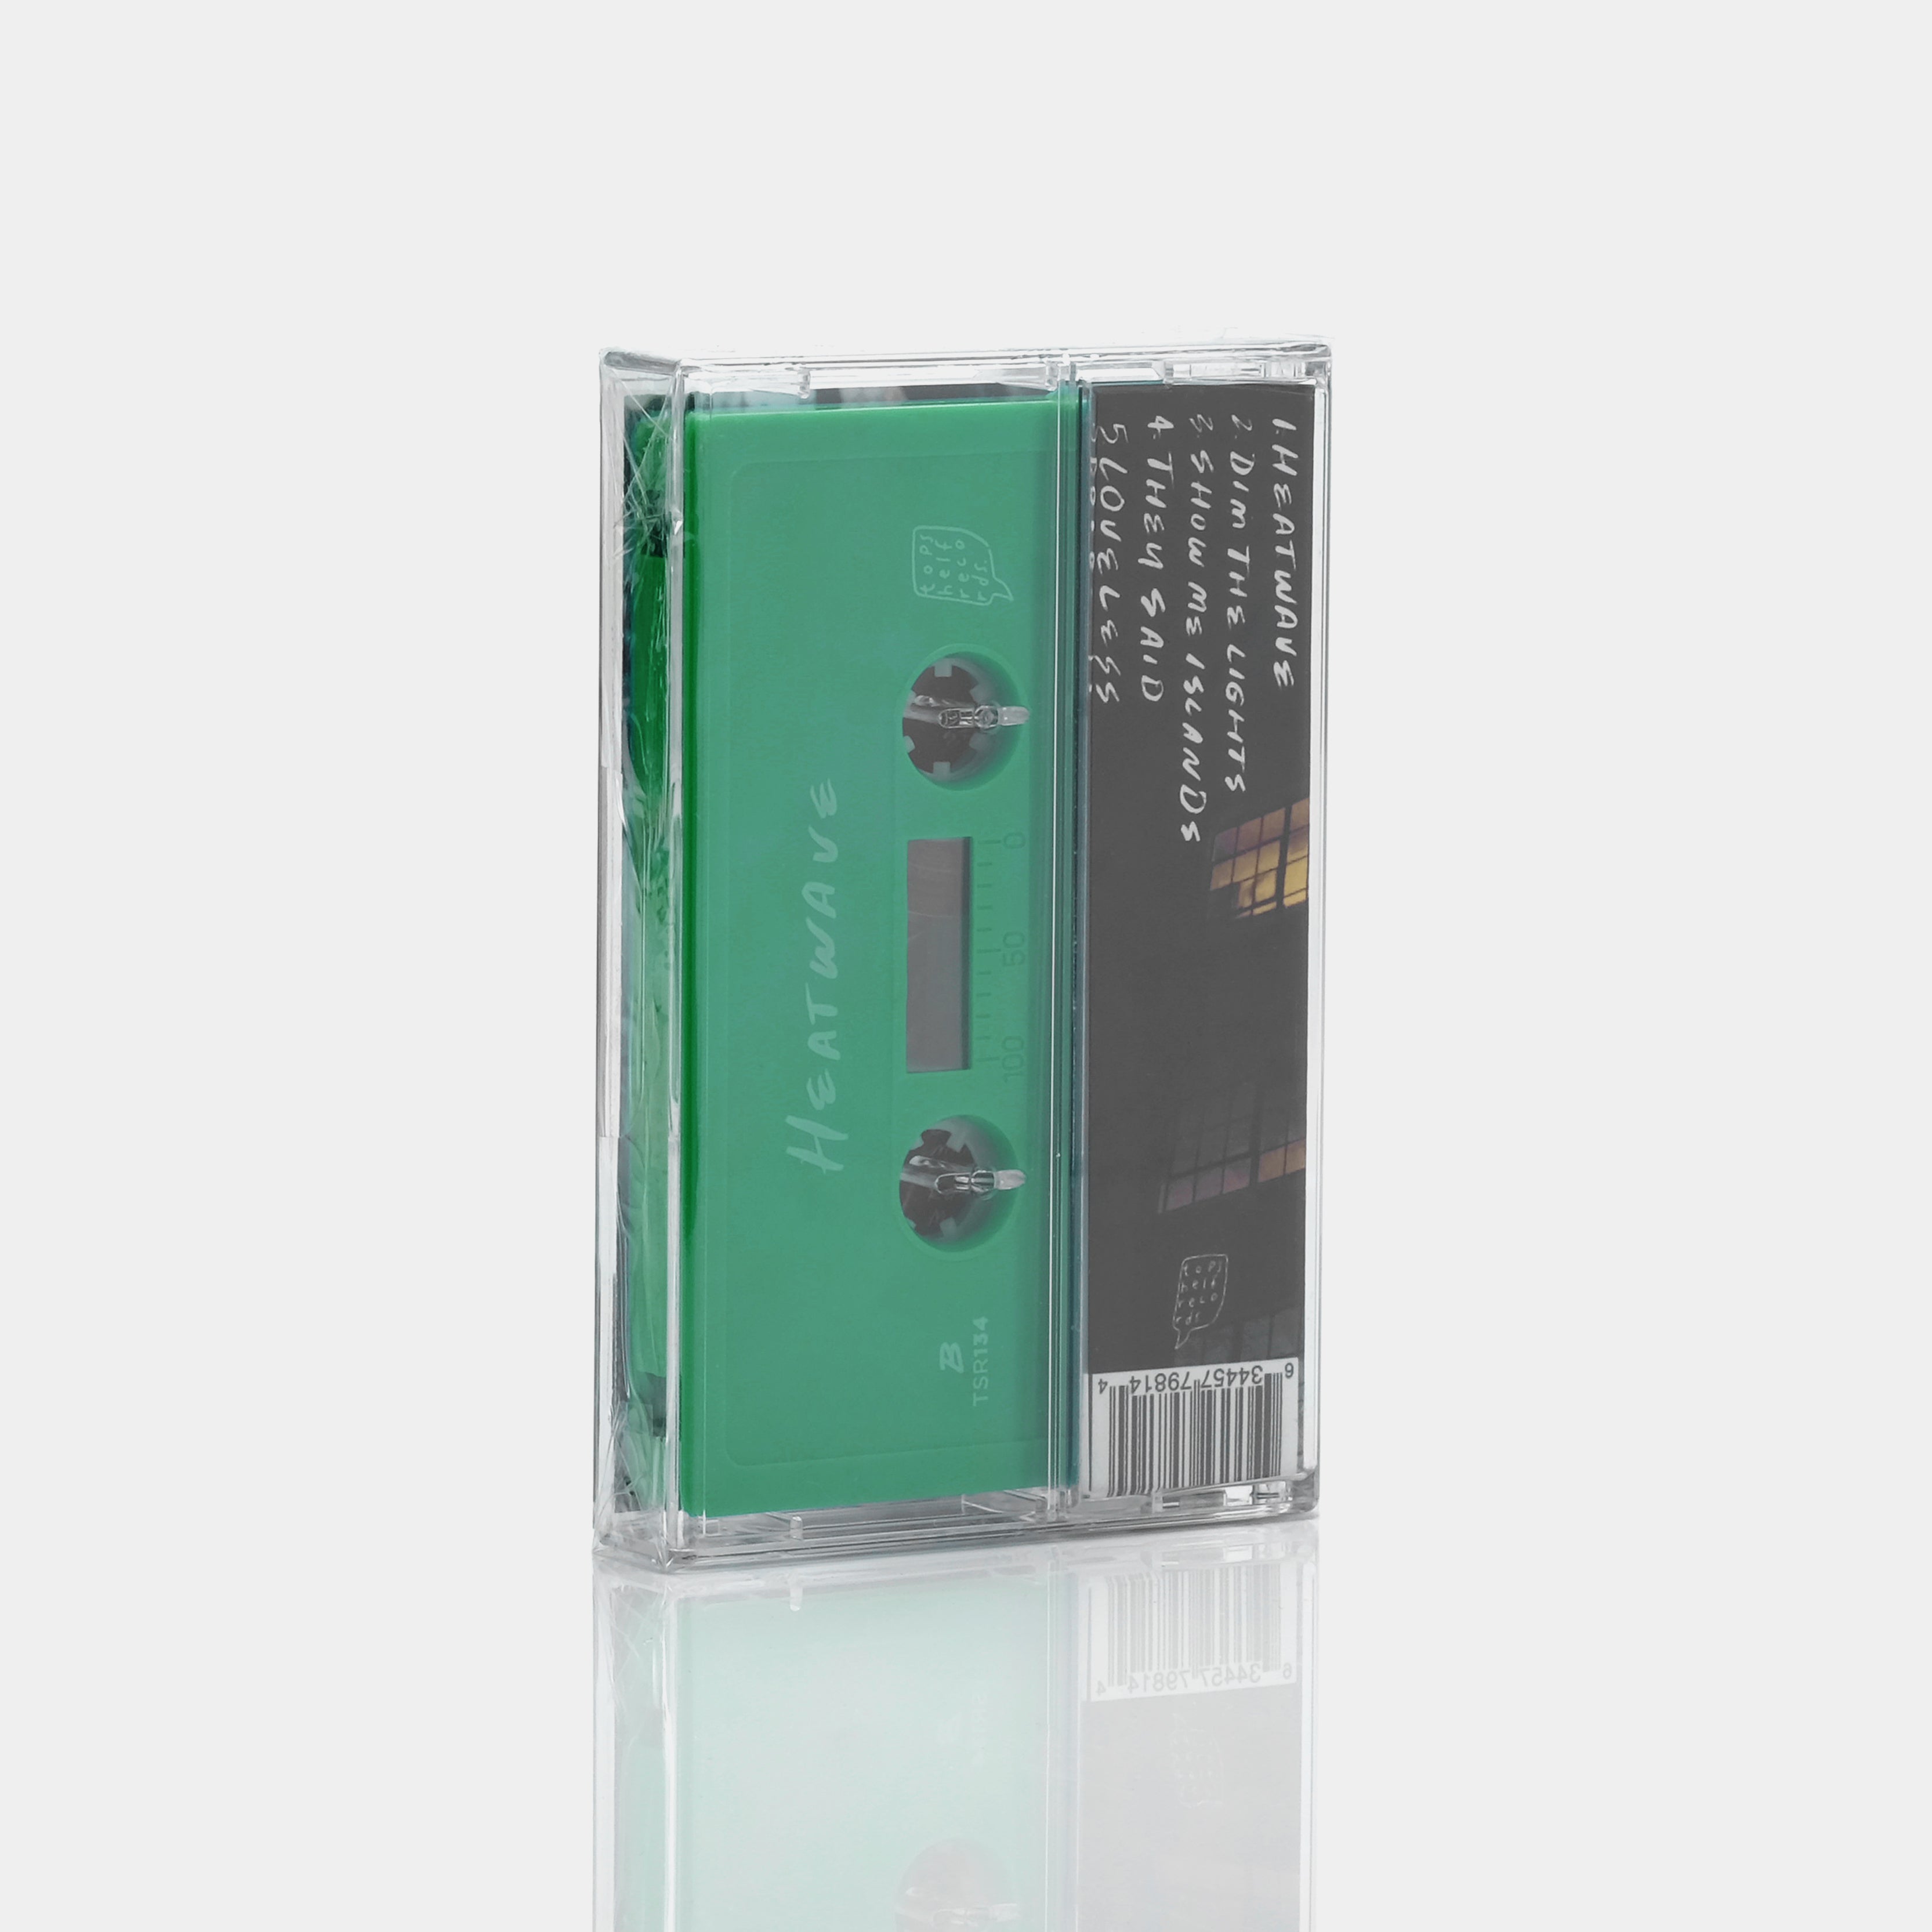 Wild Ones - Heatwave Cassette Tape